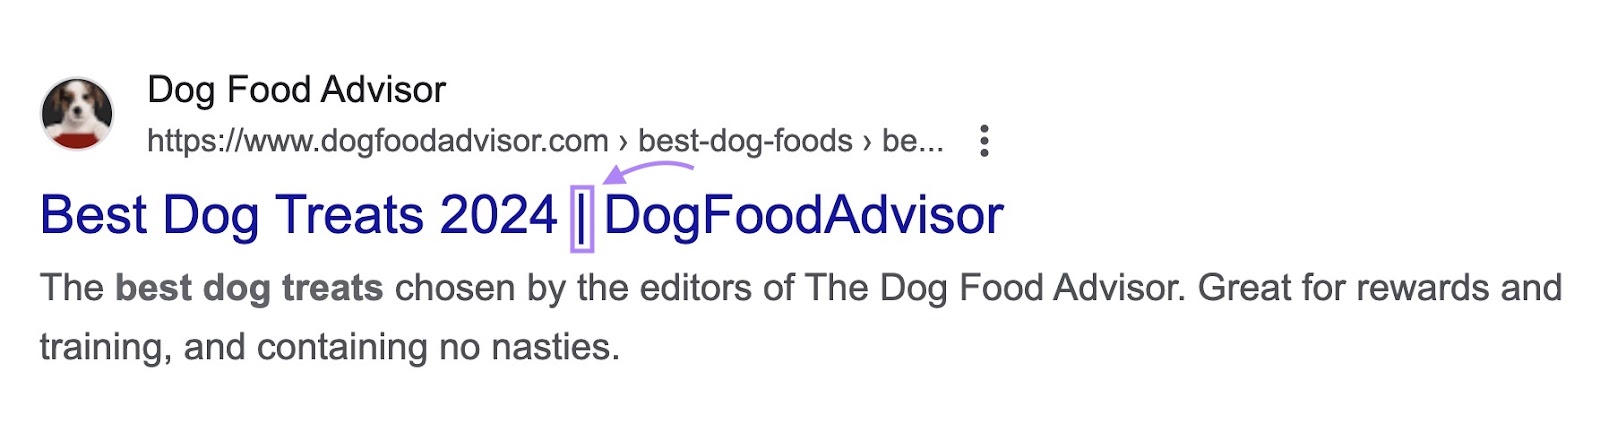  "Best Dog Treats 2024 | DogFoodAdvisor"